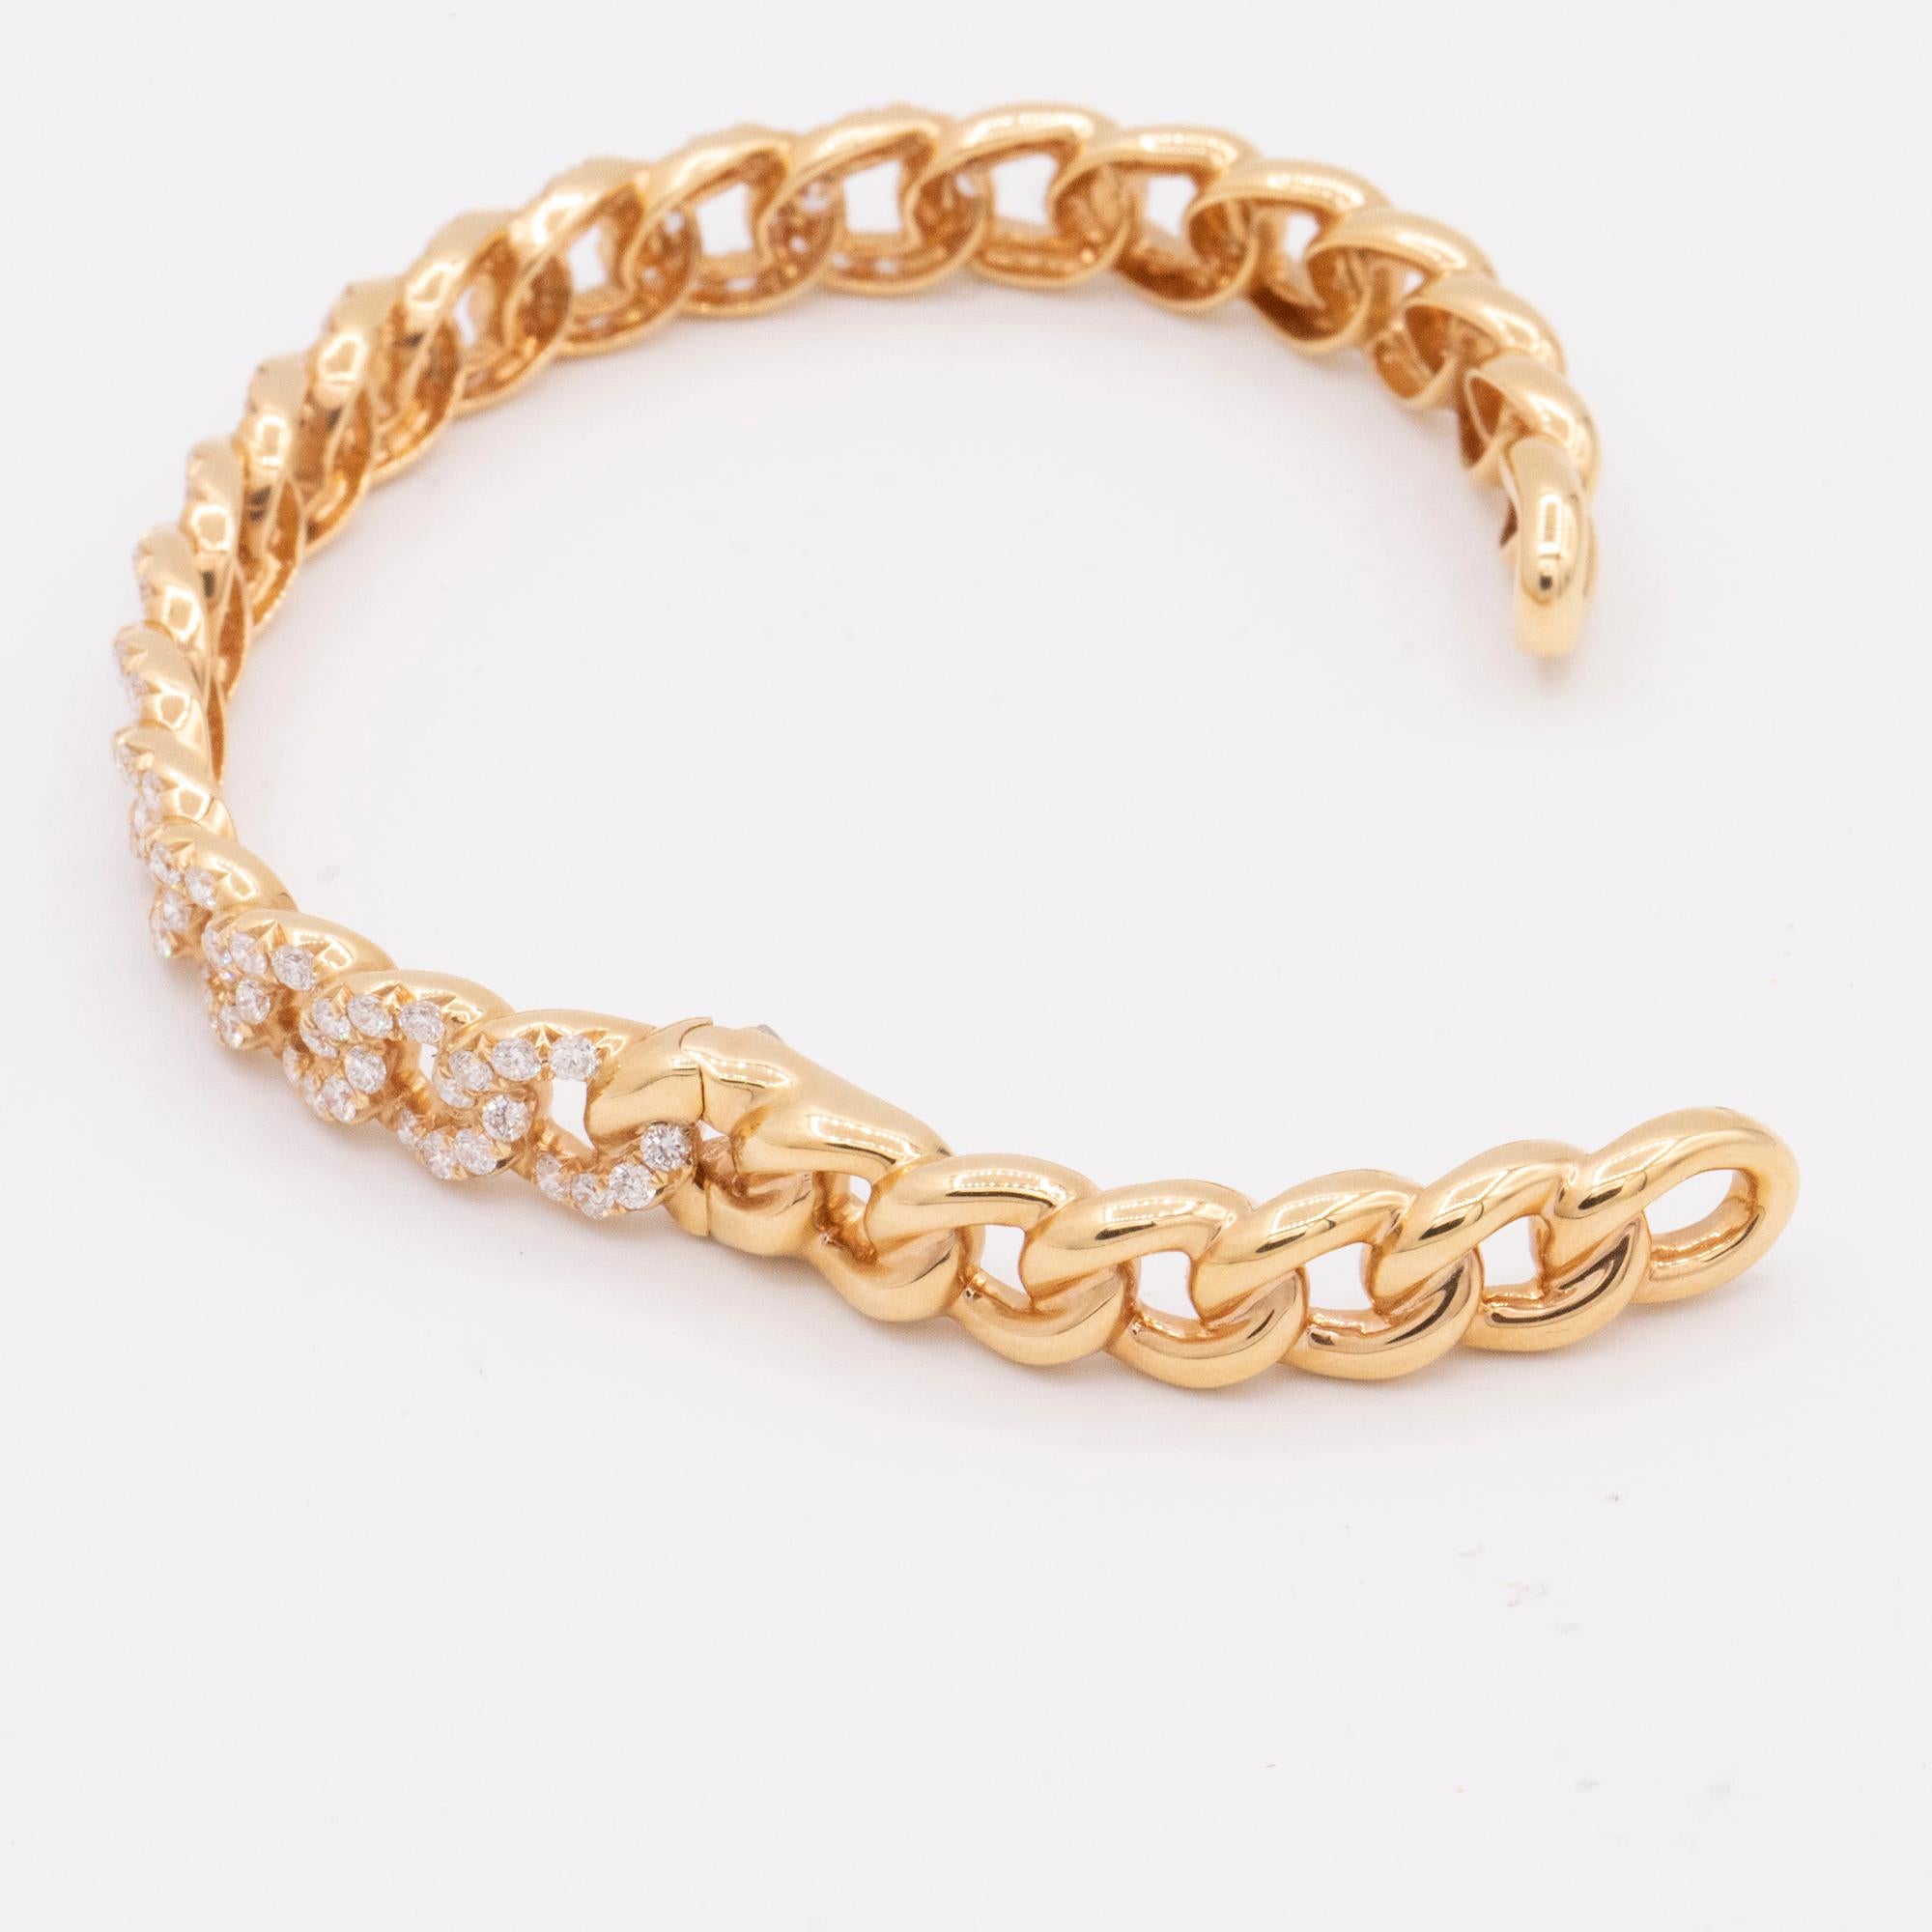 Modern Chain Link Diamond Bangle Bracelet in 18 Karat Rose Gold-Original Retail $6995